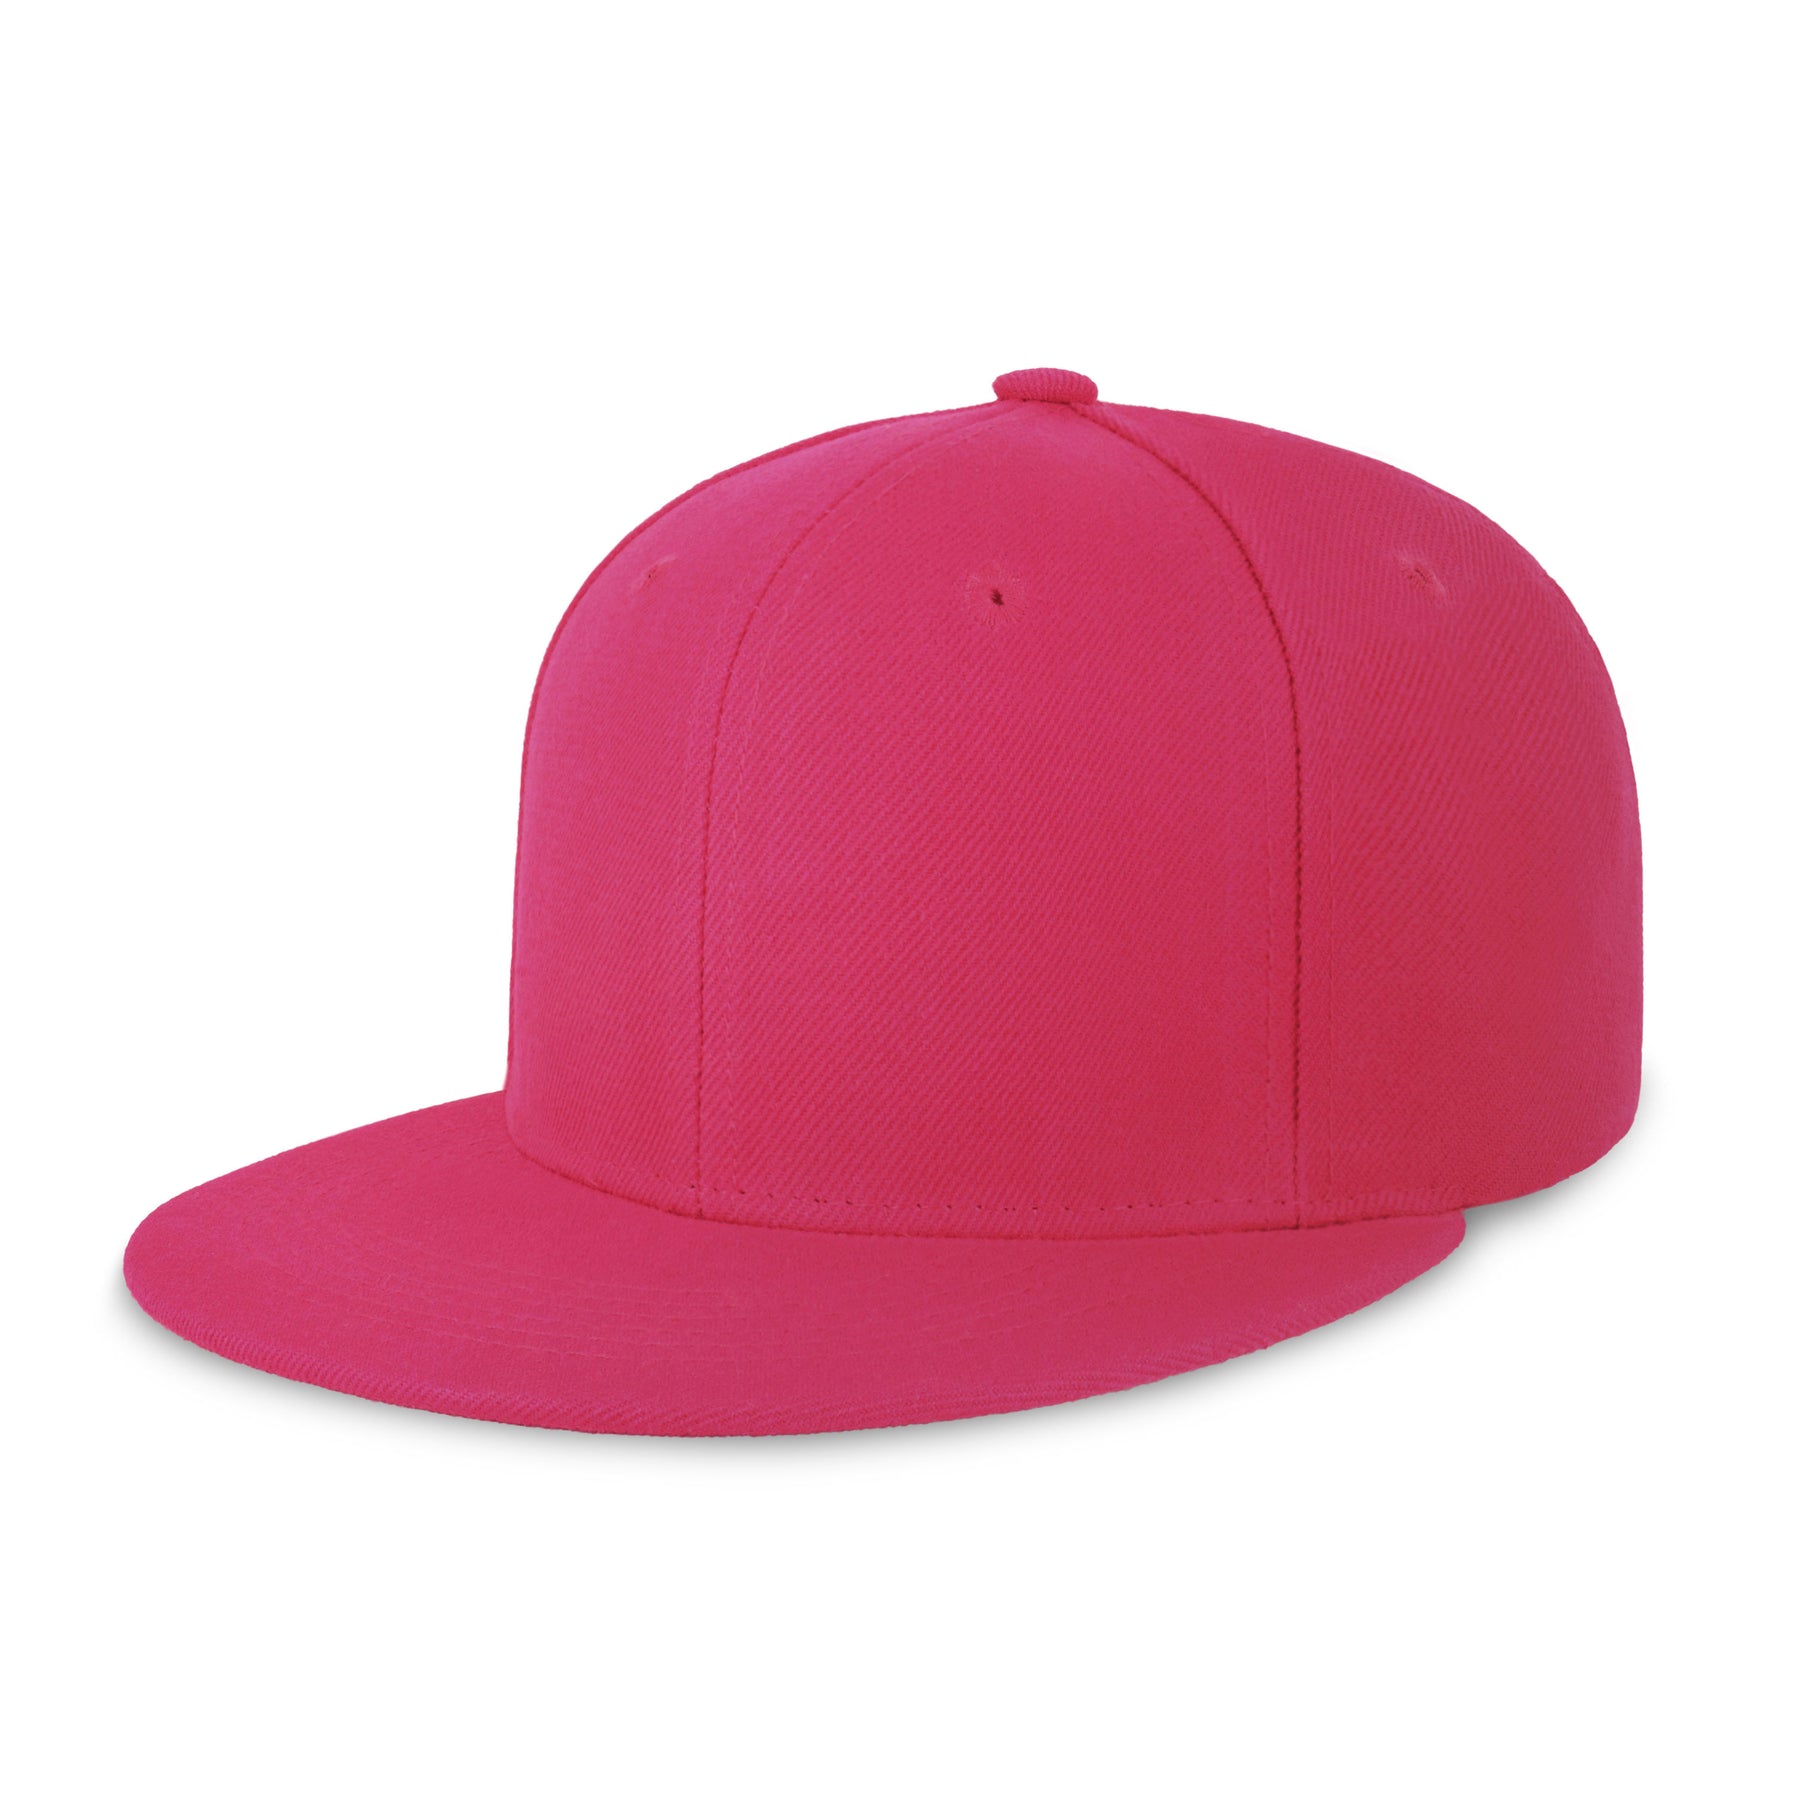 Hot pink Plain Solid Snapback Hat